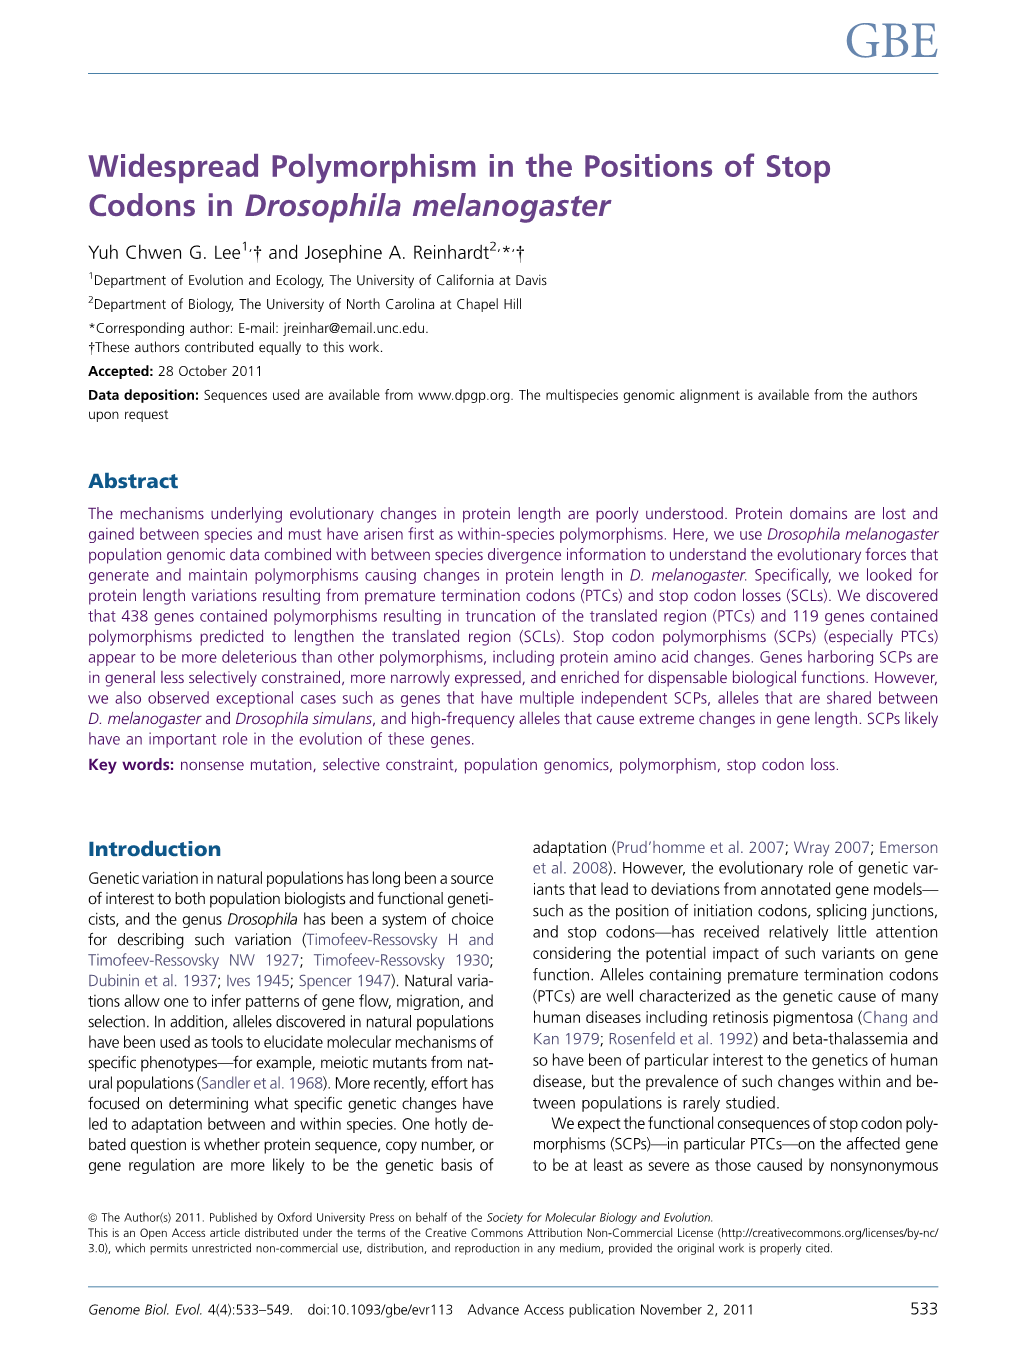 Widespread Polymorphism in the Positions of Stop Codons in Drosophila Melanogaster